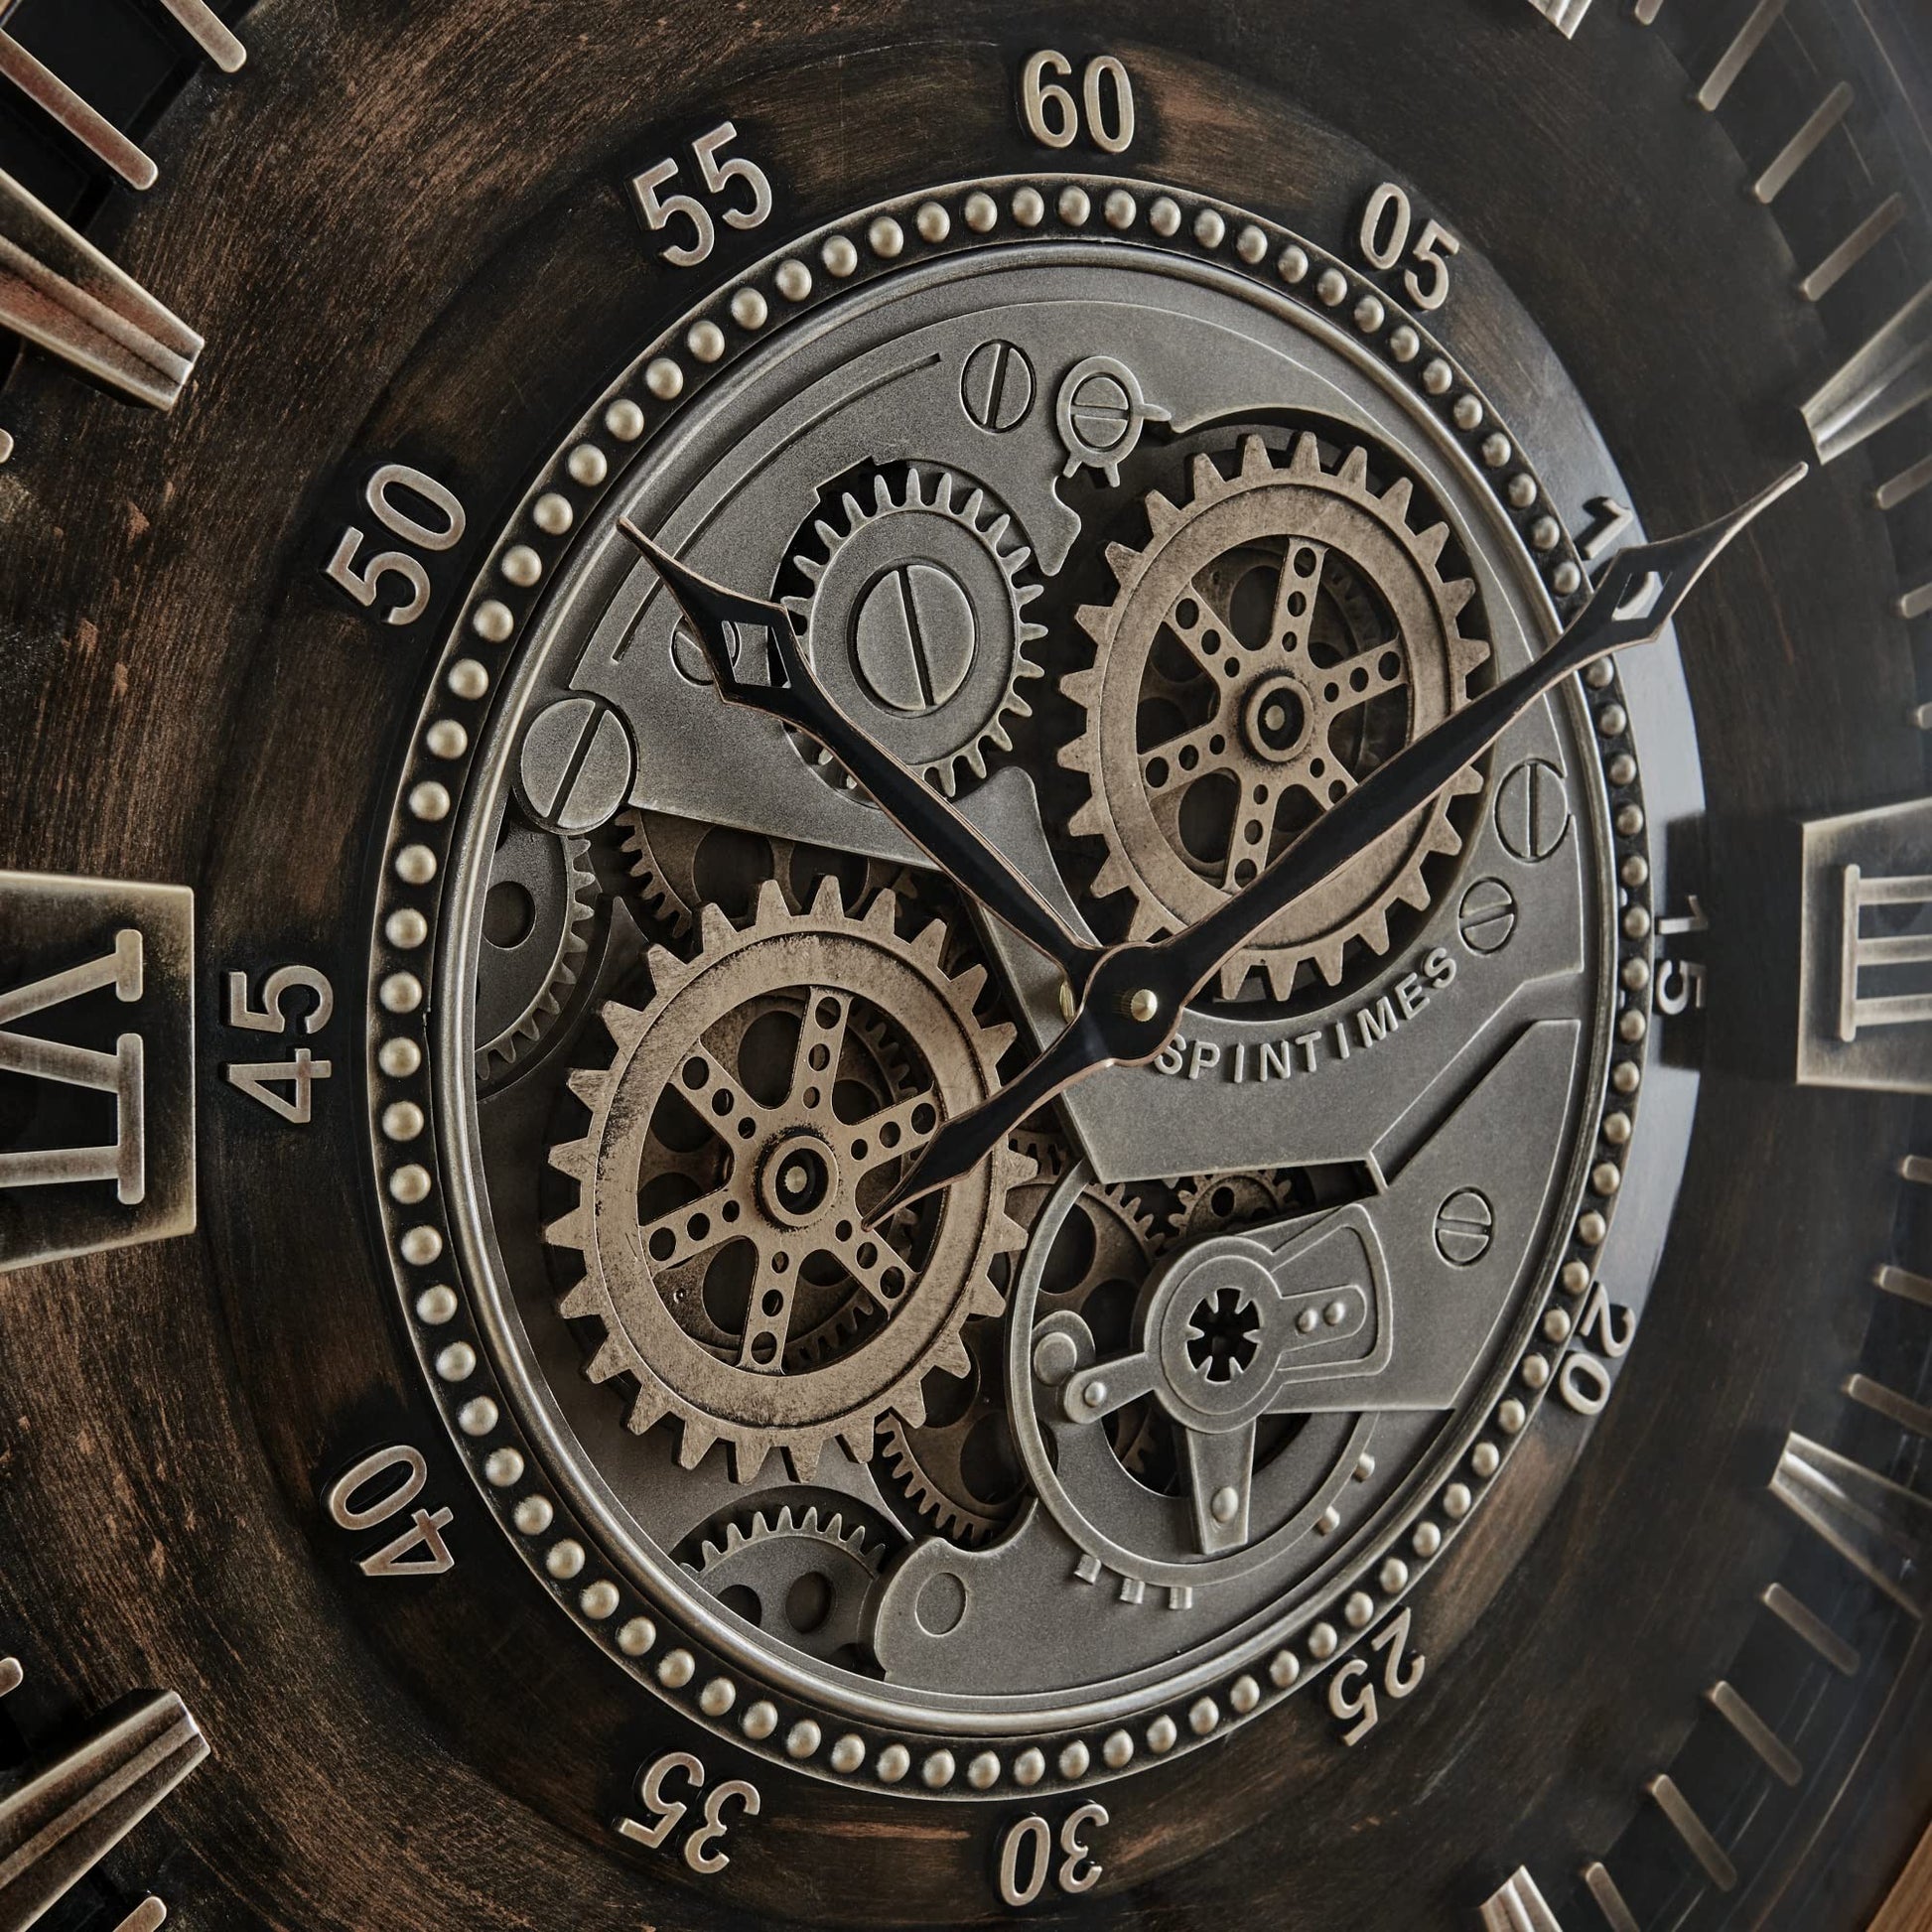 WALL CLOCK 24 INCH VINTAGE BLACK – The Gears Clock